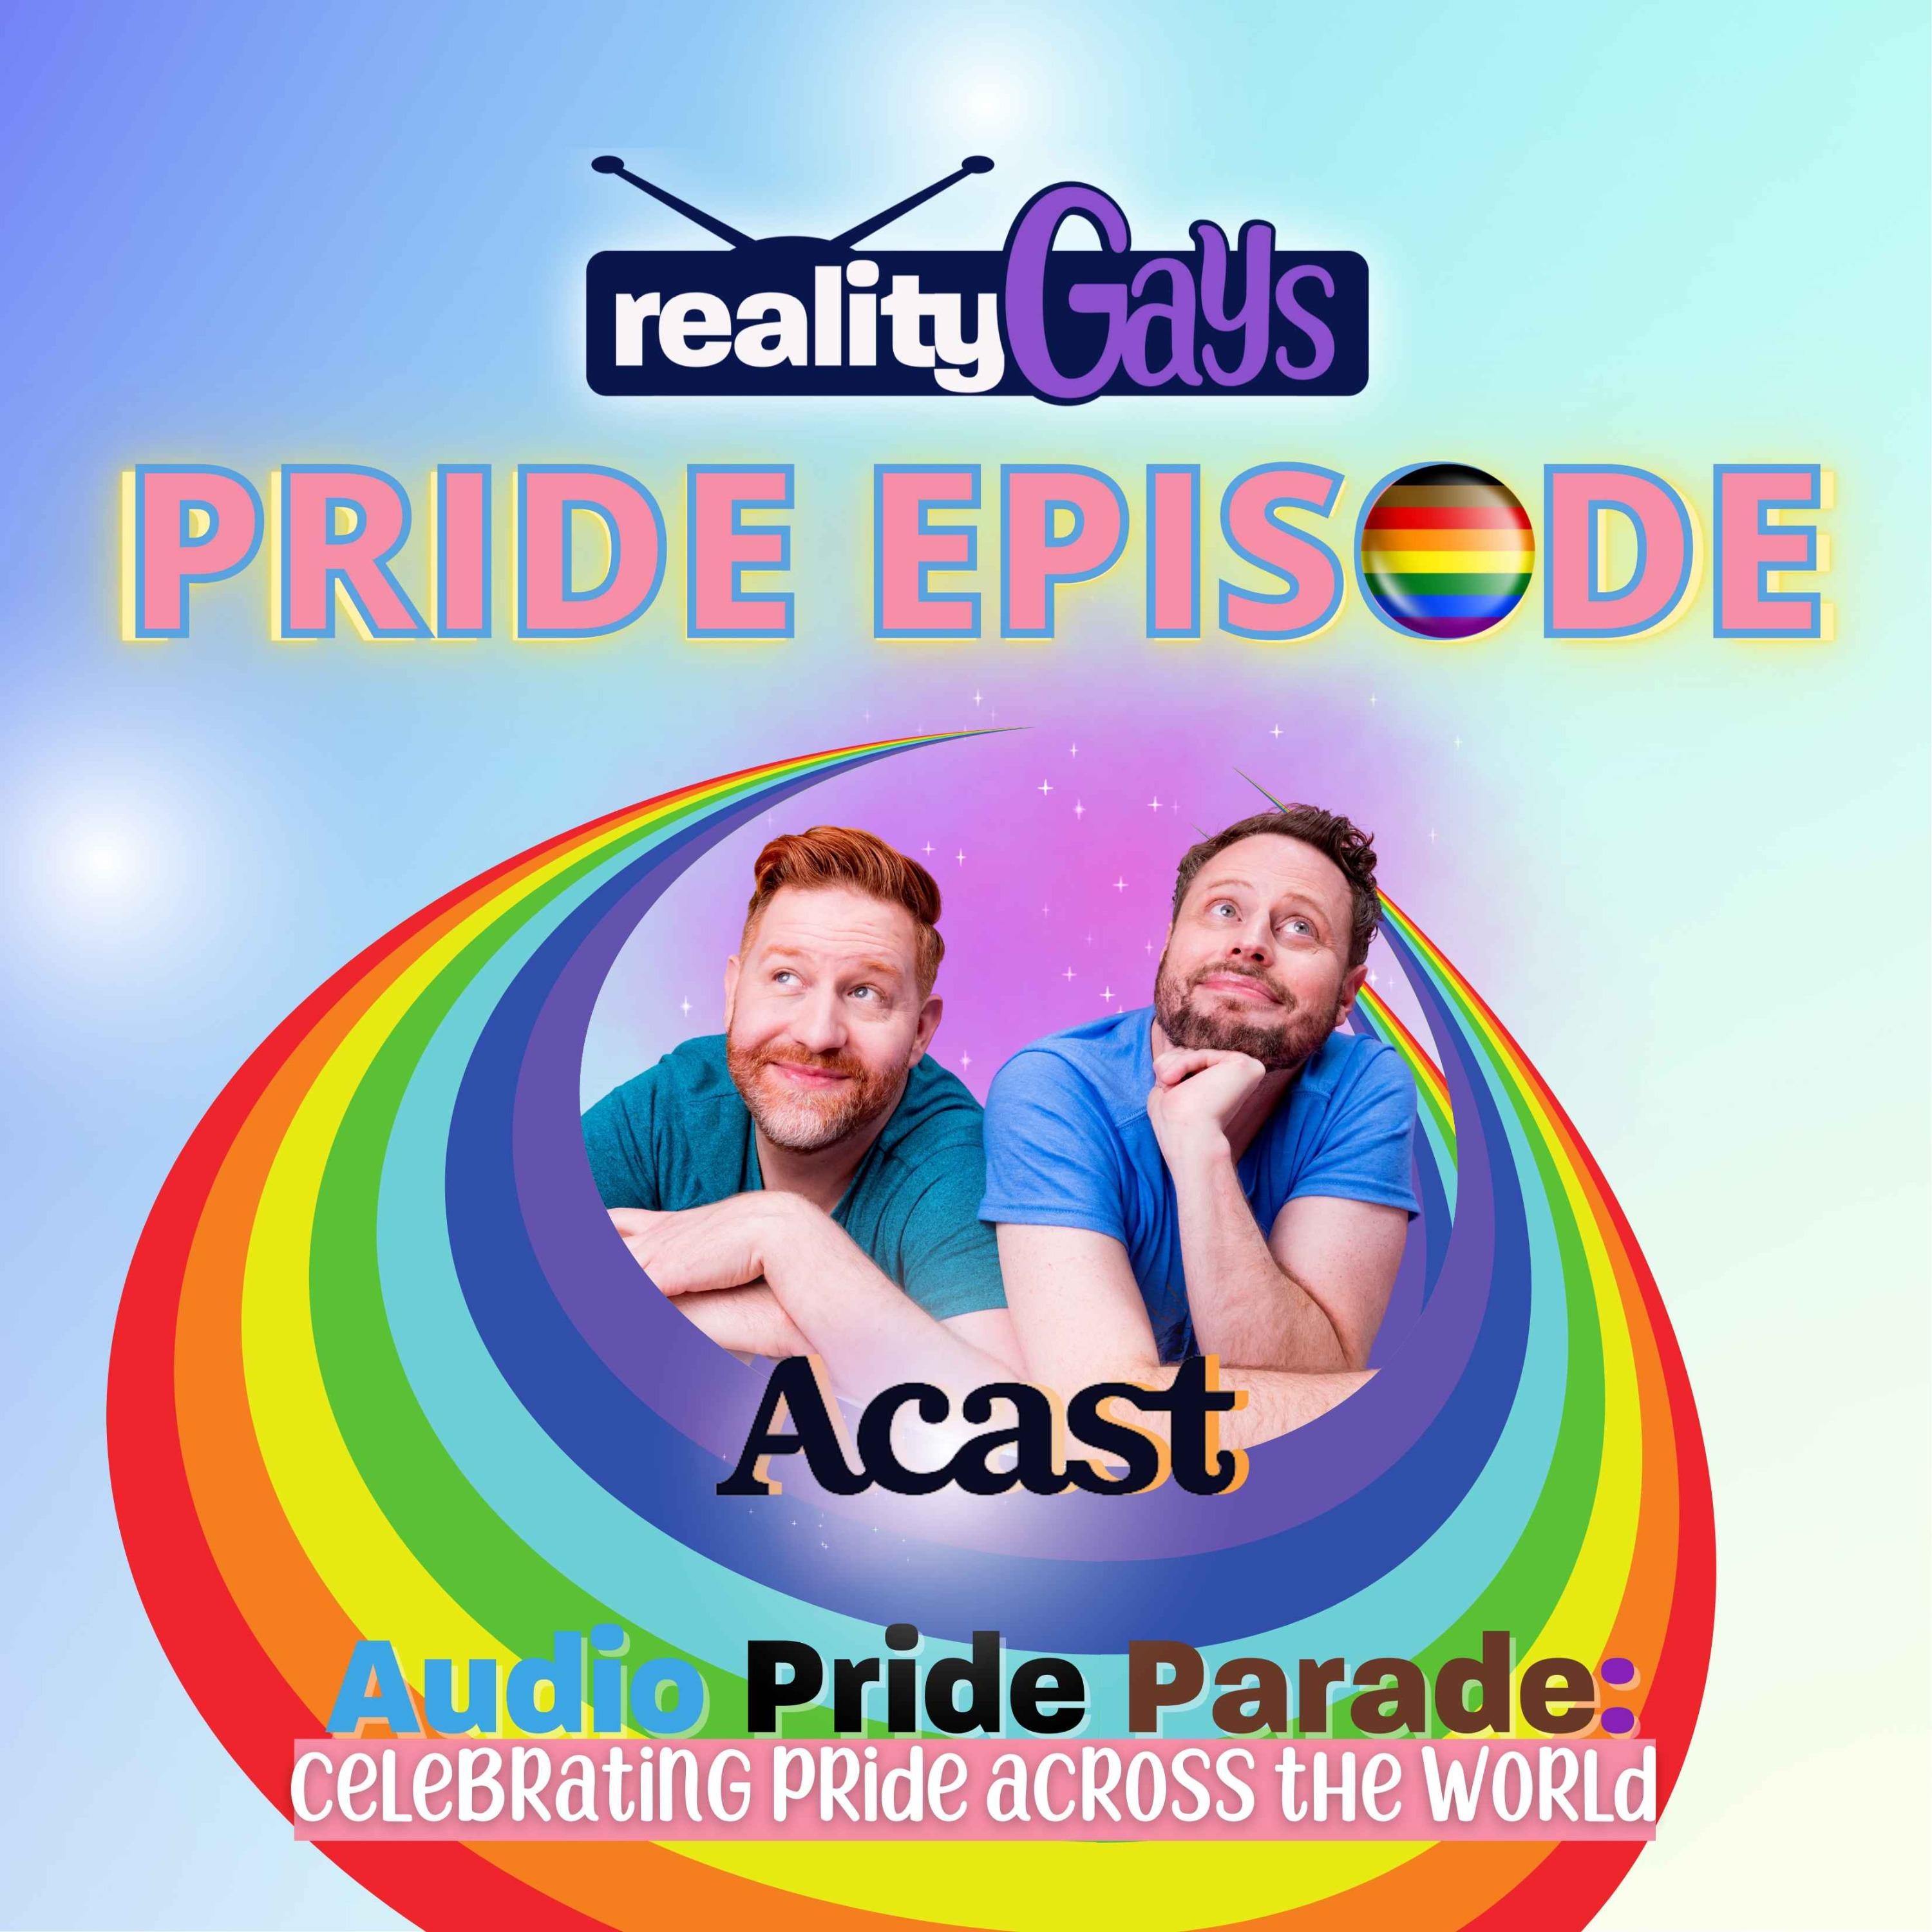 Reality Gays Bonus: Acast's Audio Pride Parade Episode 2022 Image